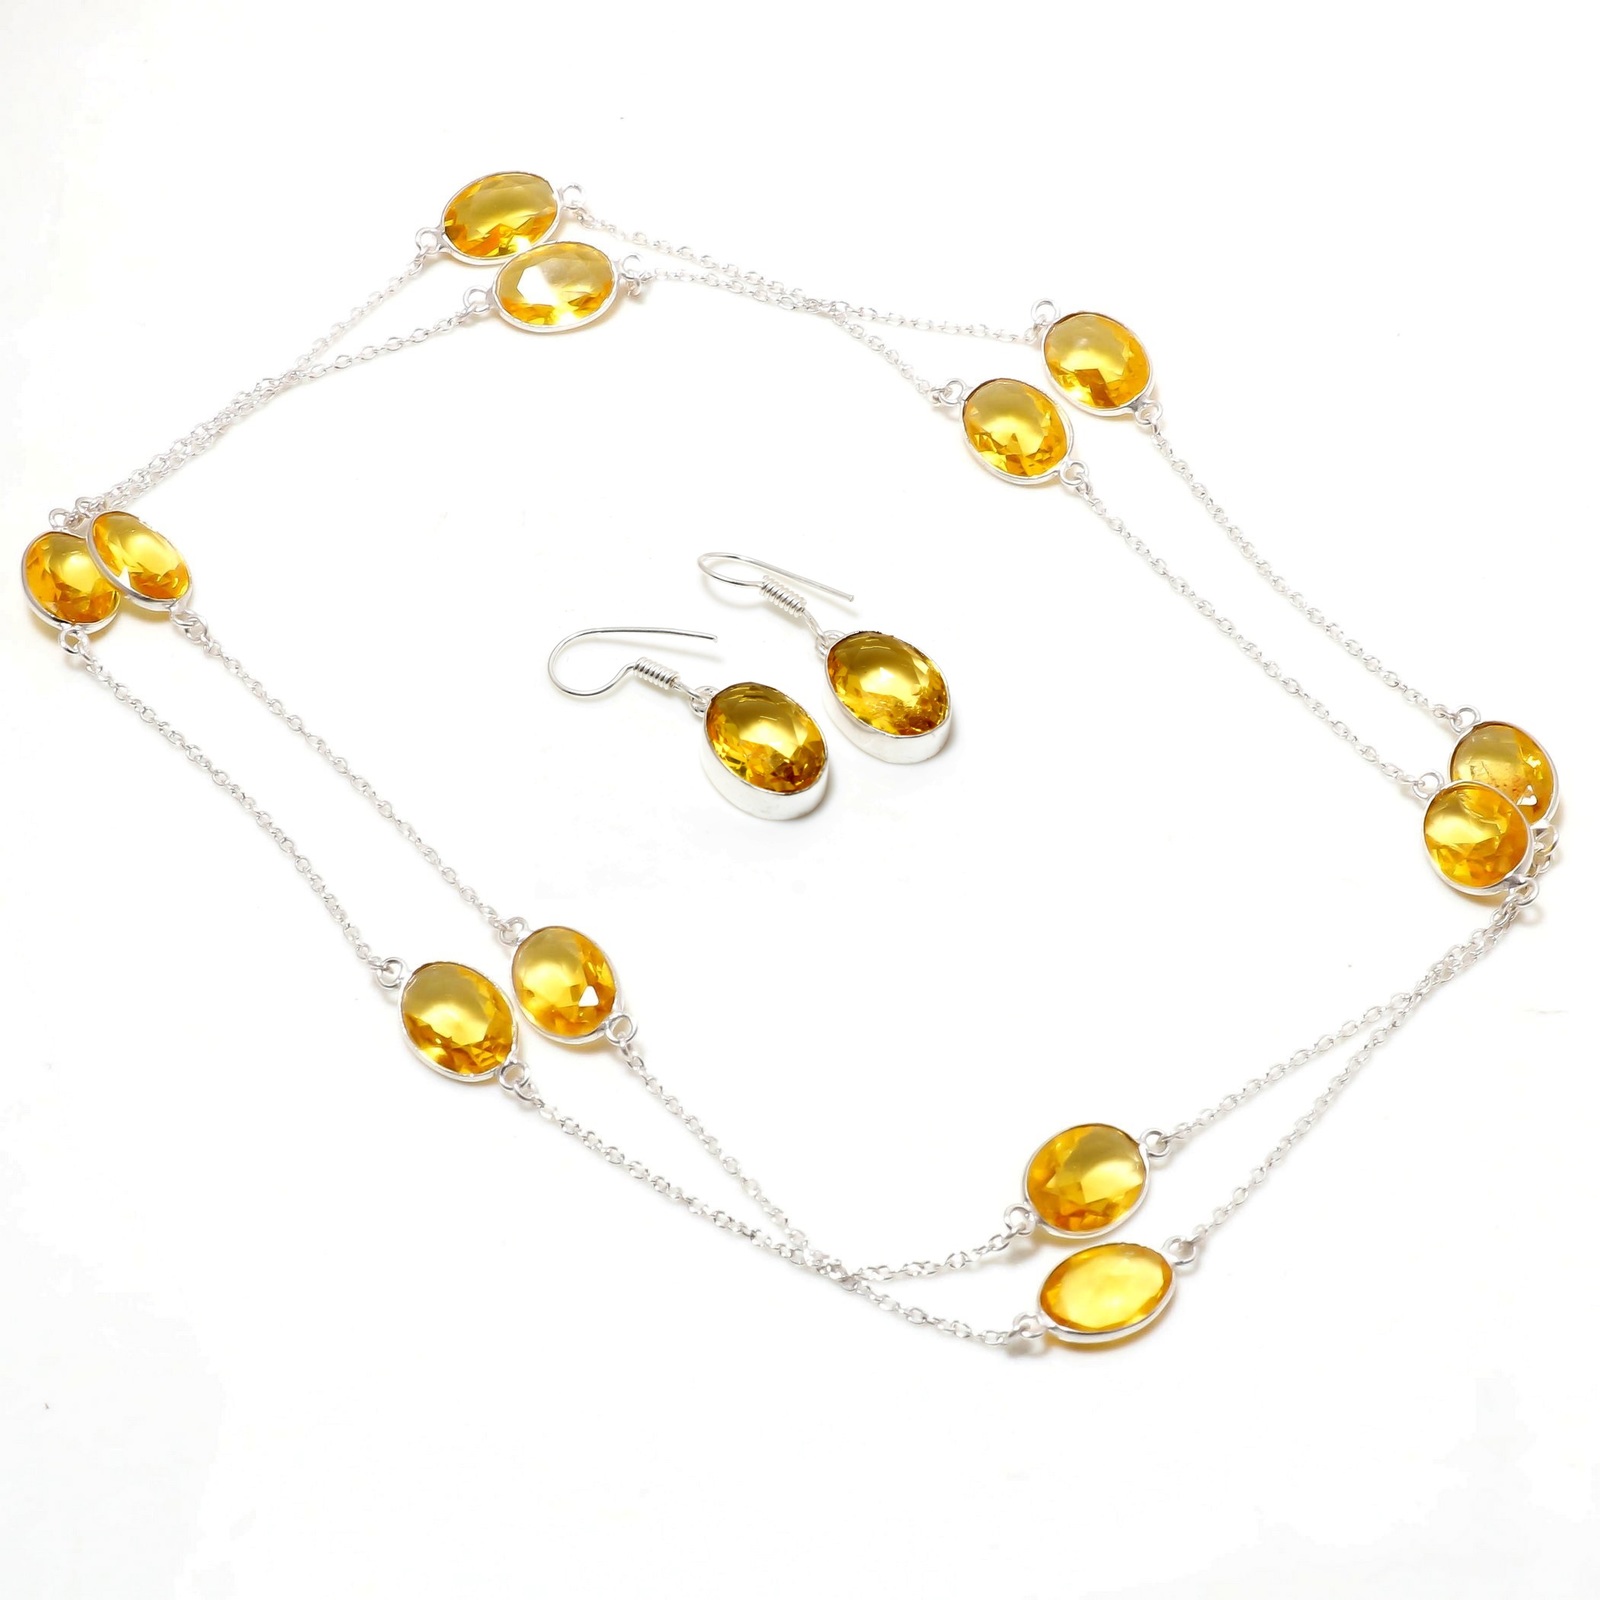 Citrine Topaz Oval Shape Handmade Ethnic Gifted Necklace Set Jewelry 36" SA 6693 - $9.09